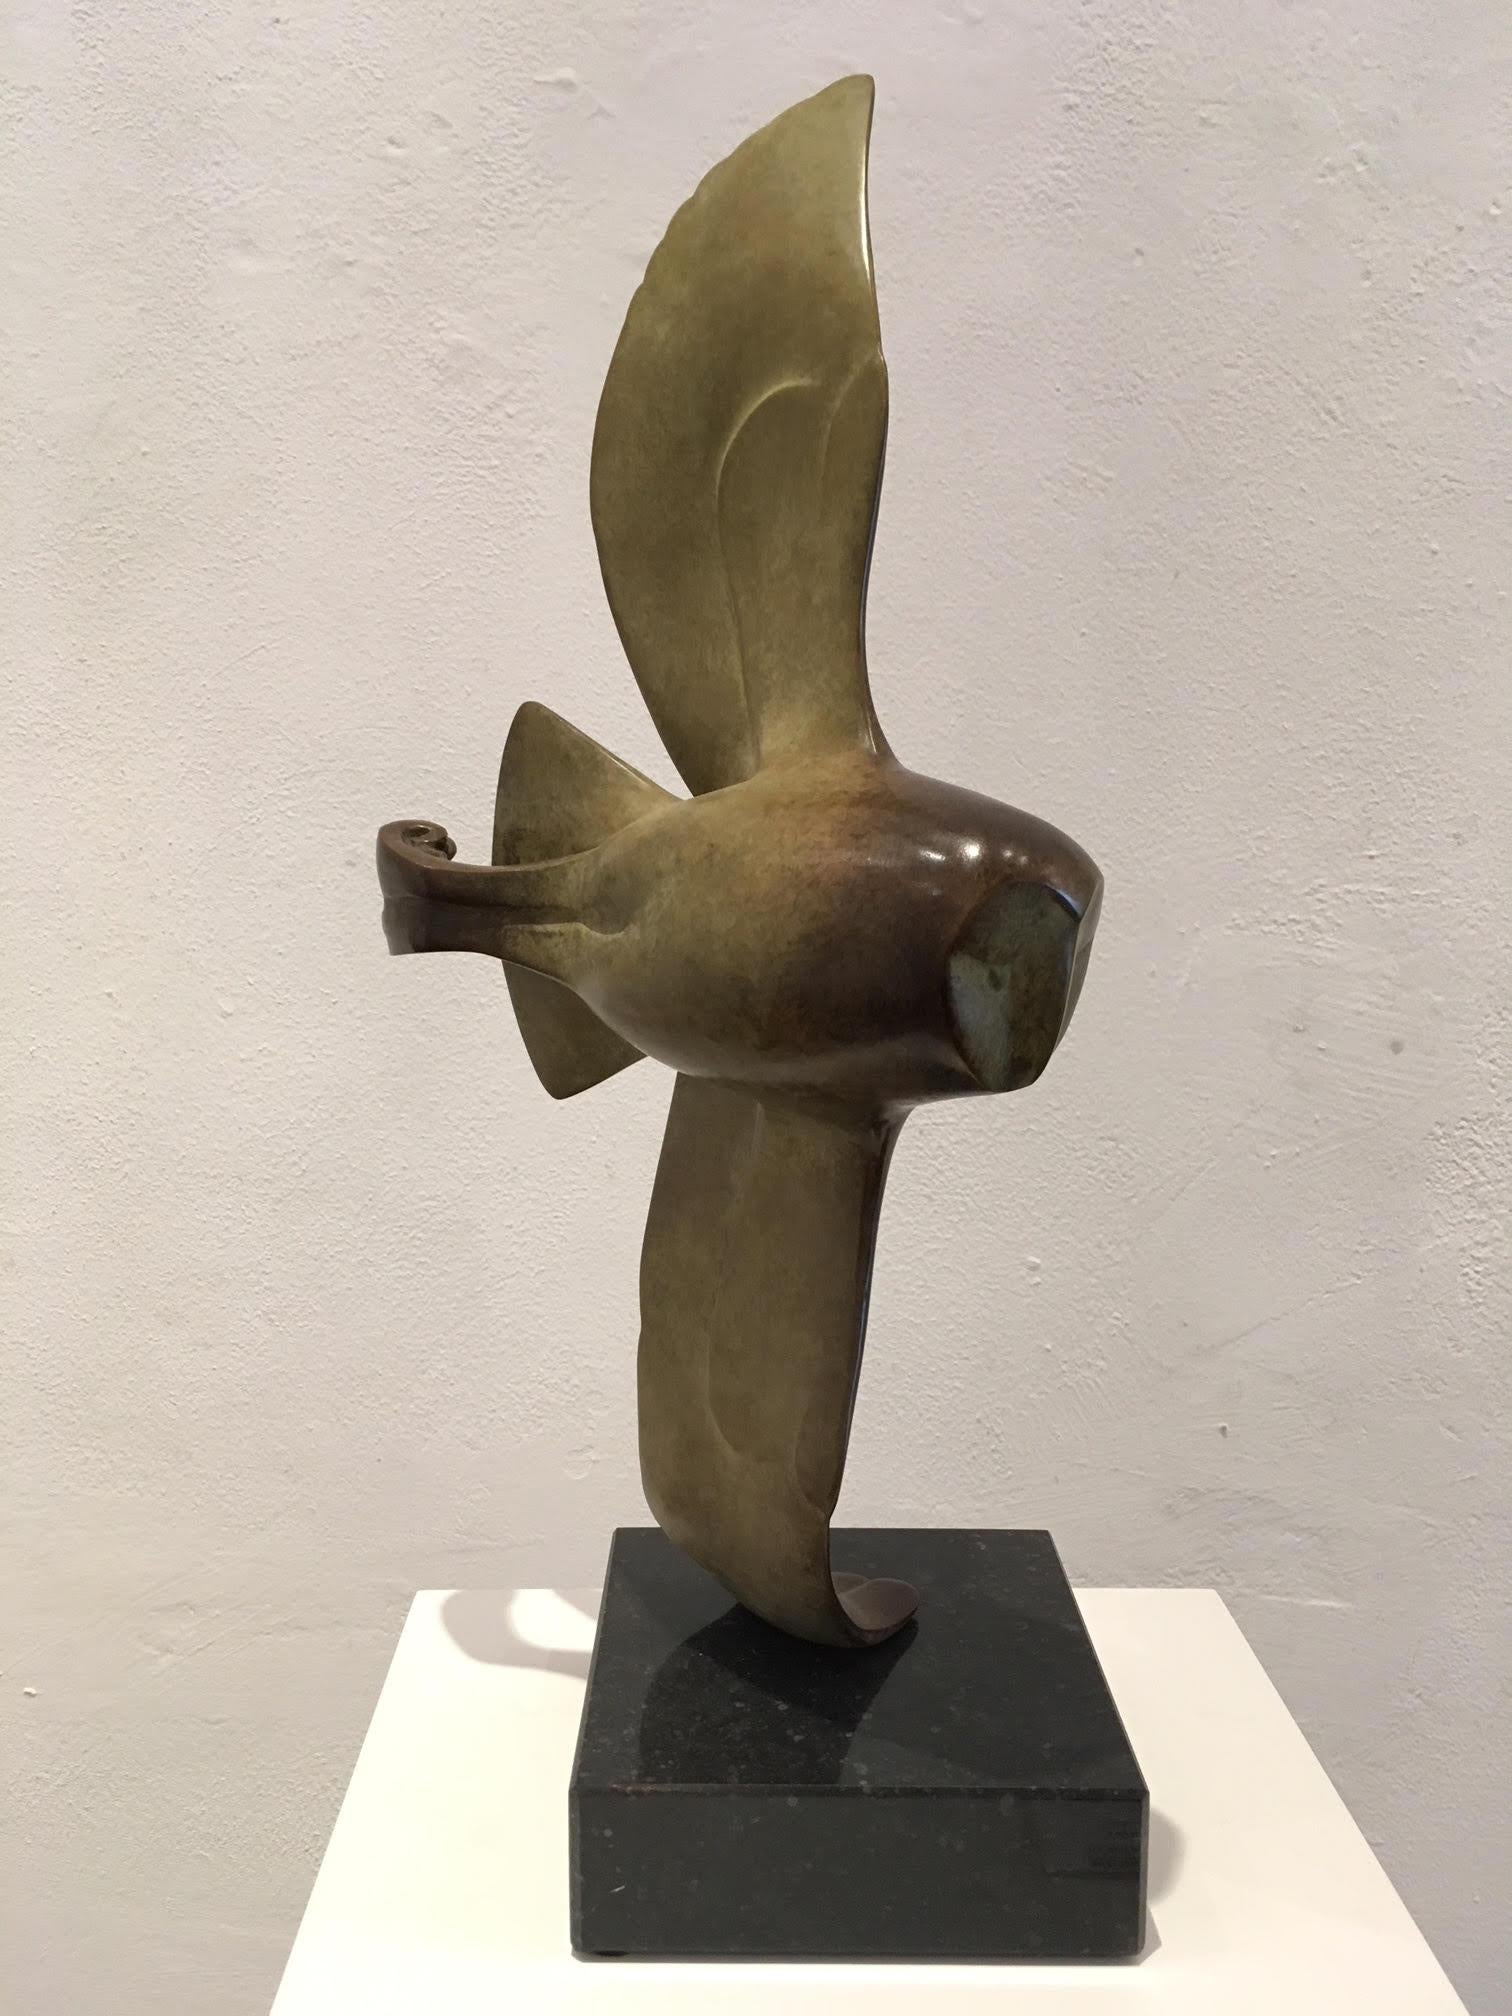 Vliegende Uil Nr. 4 Fliegende Eule, Bronzeskulptur, Tier  (Gold), Figurative Sculpture, von Evert den Hartog